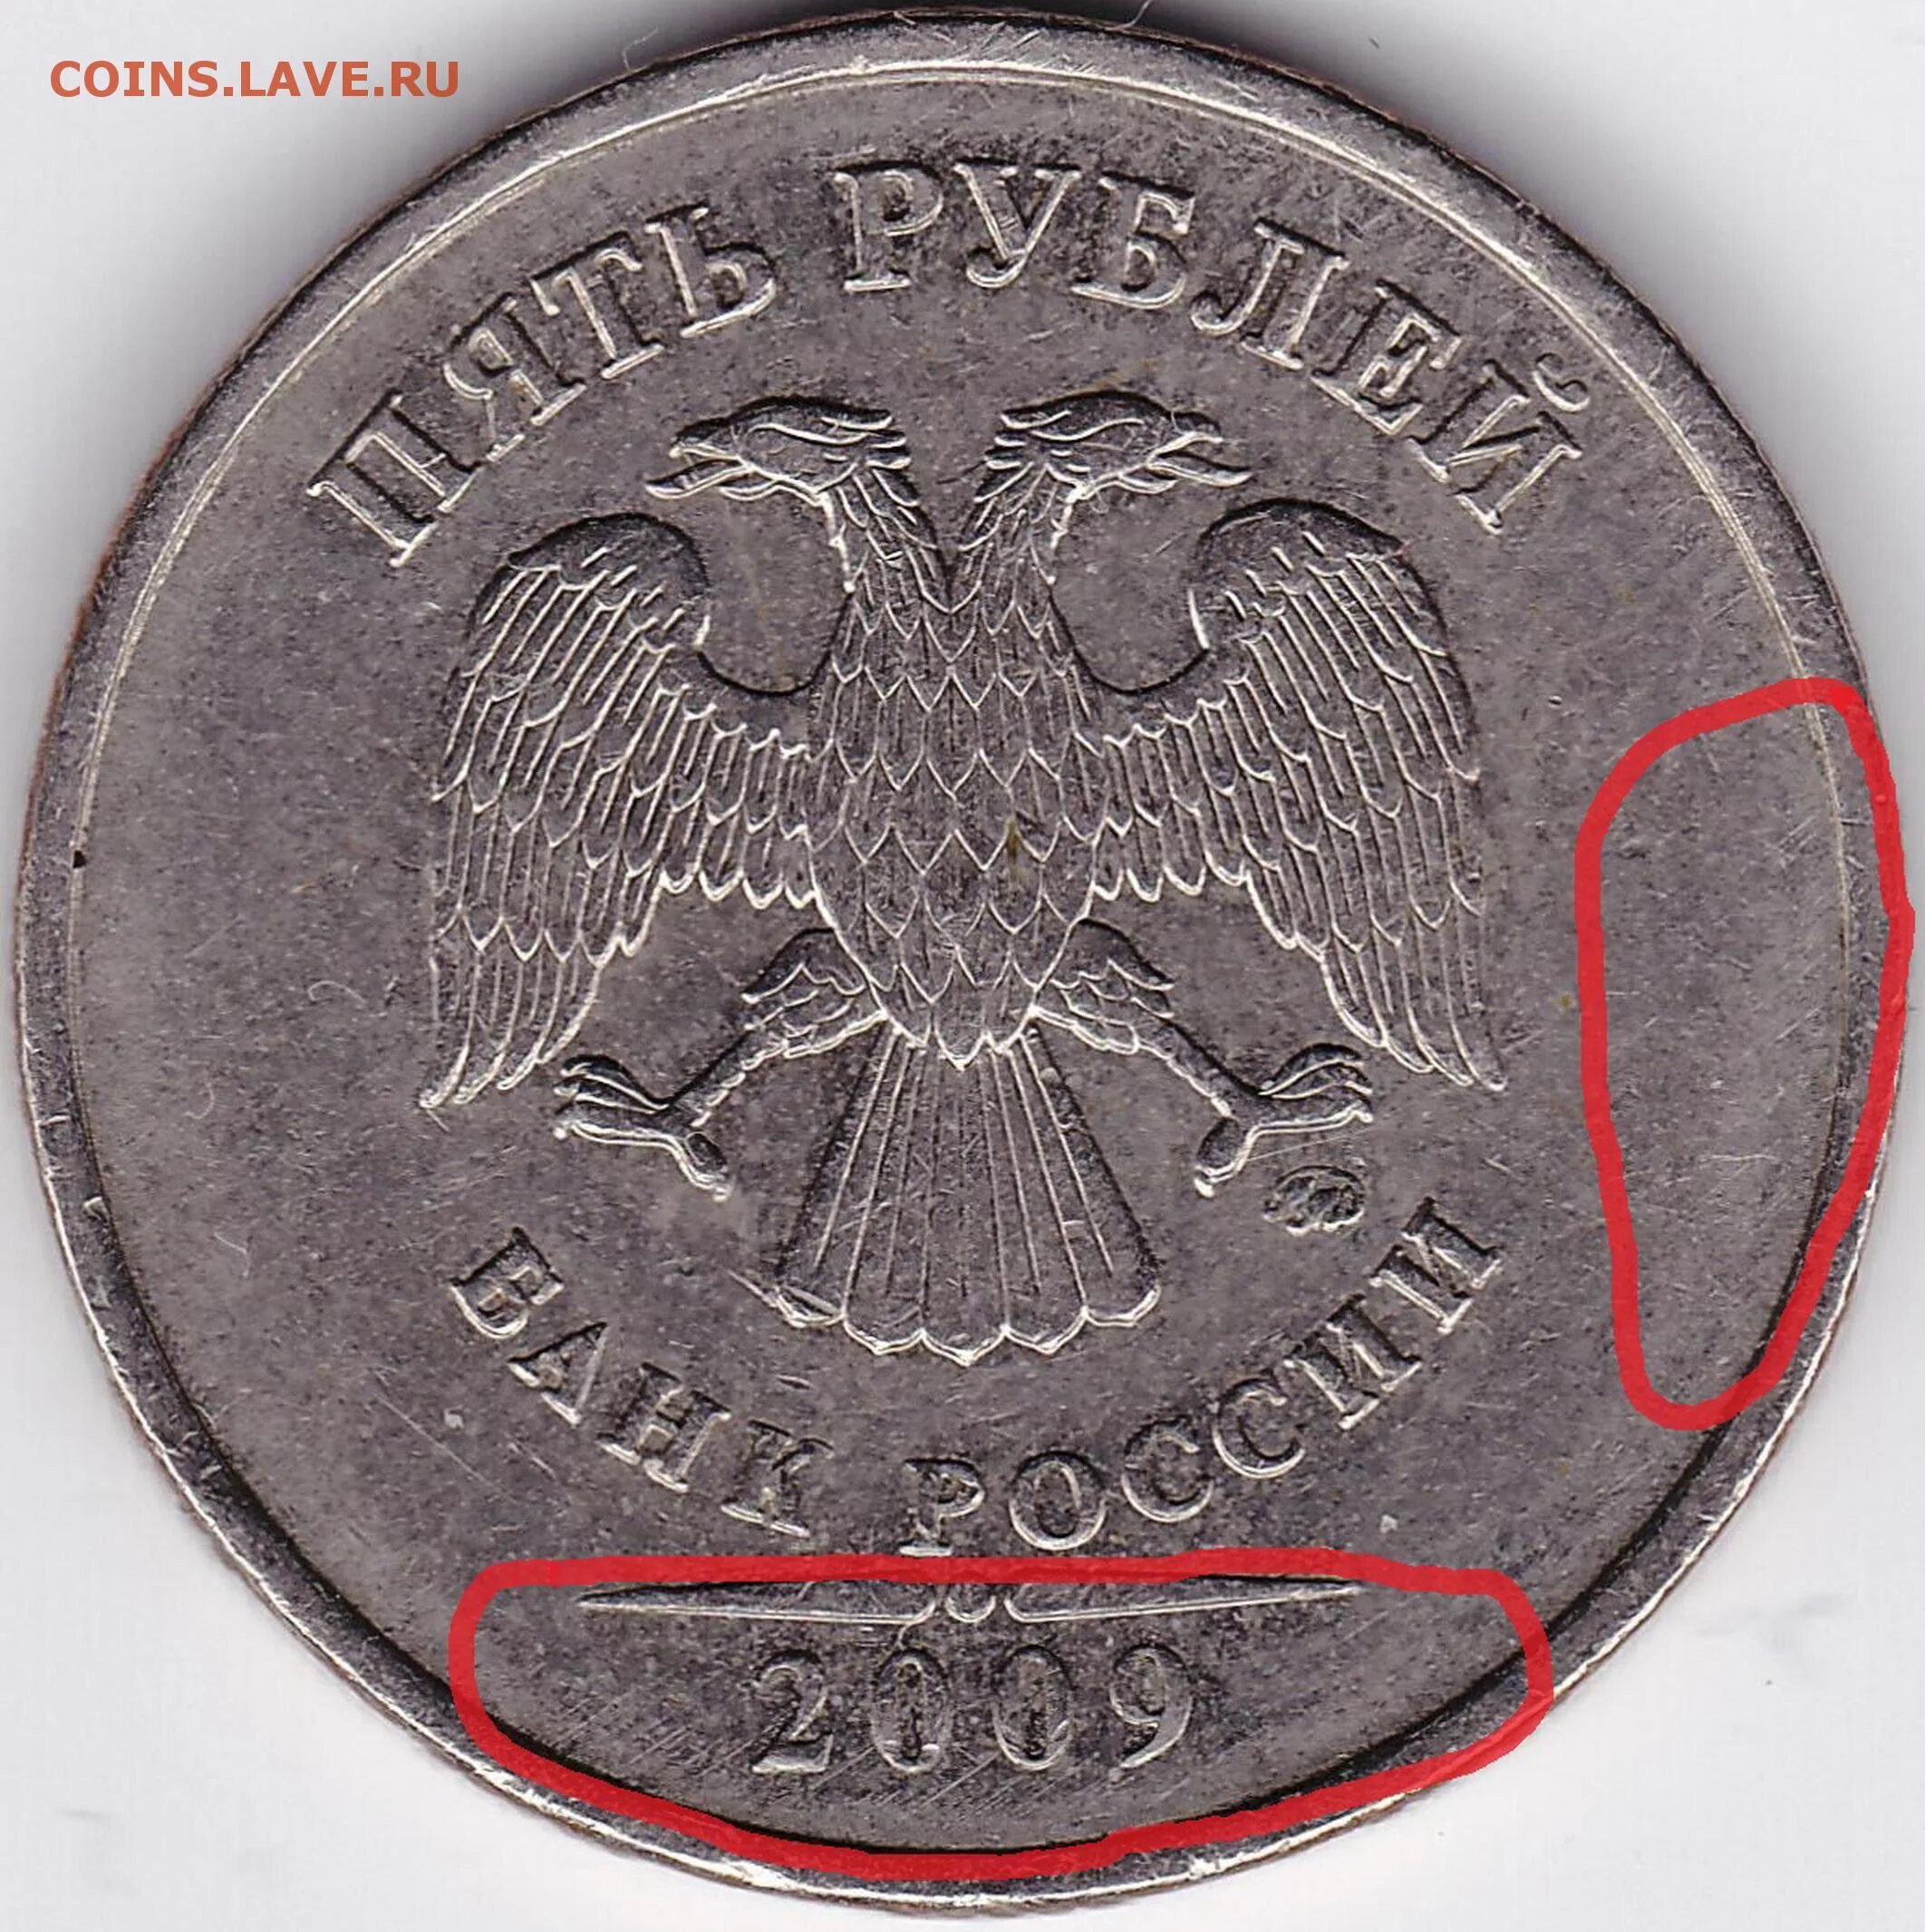 5 рублей ммд. 5 Рублей 2009 ММД немагнитная. 1 Рубль 2009 ММД (немагнитная). 5 Рублей 2009 года немагнитные. Немагнитный 5 рубль немагнитная.